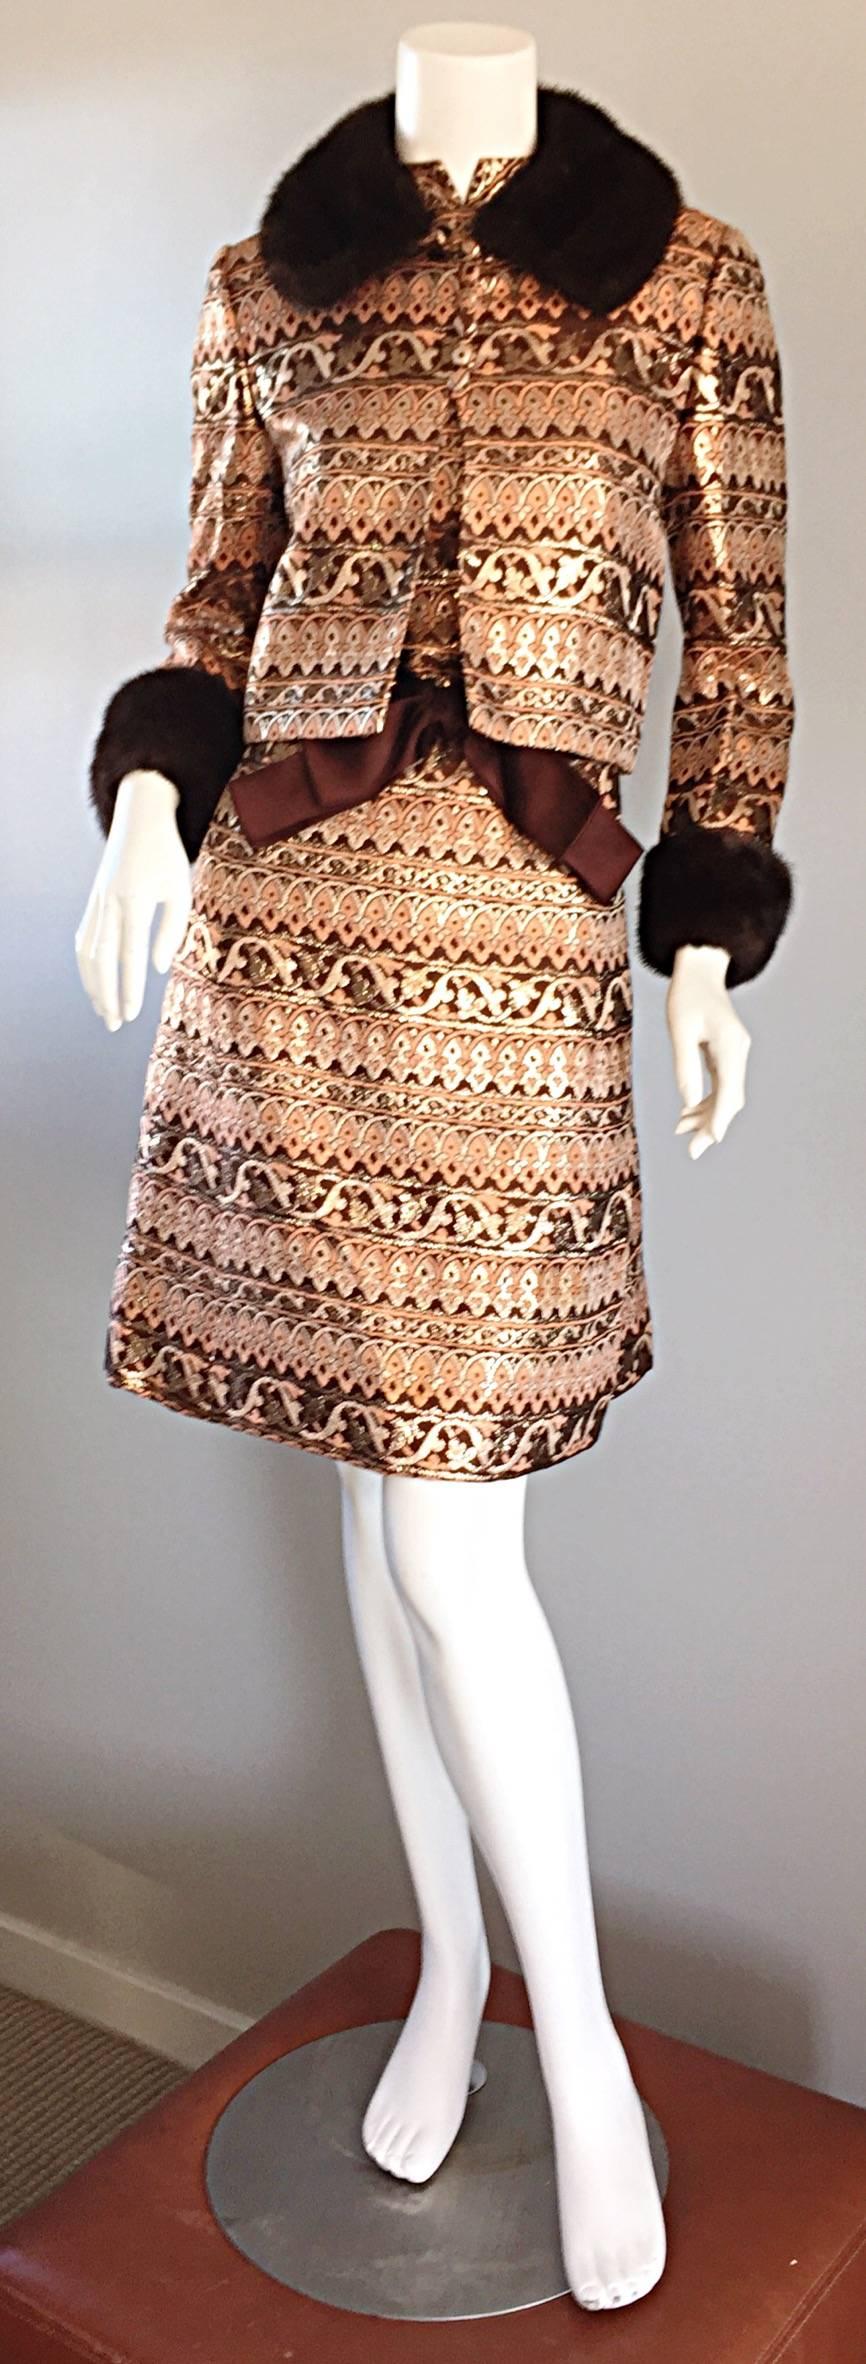 Brown Amazing Early Adele Simpson 1960s 60s Metallic Brocade Dress & Mink Fur Jacket